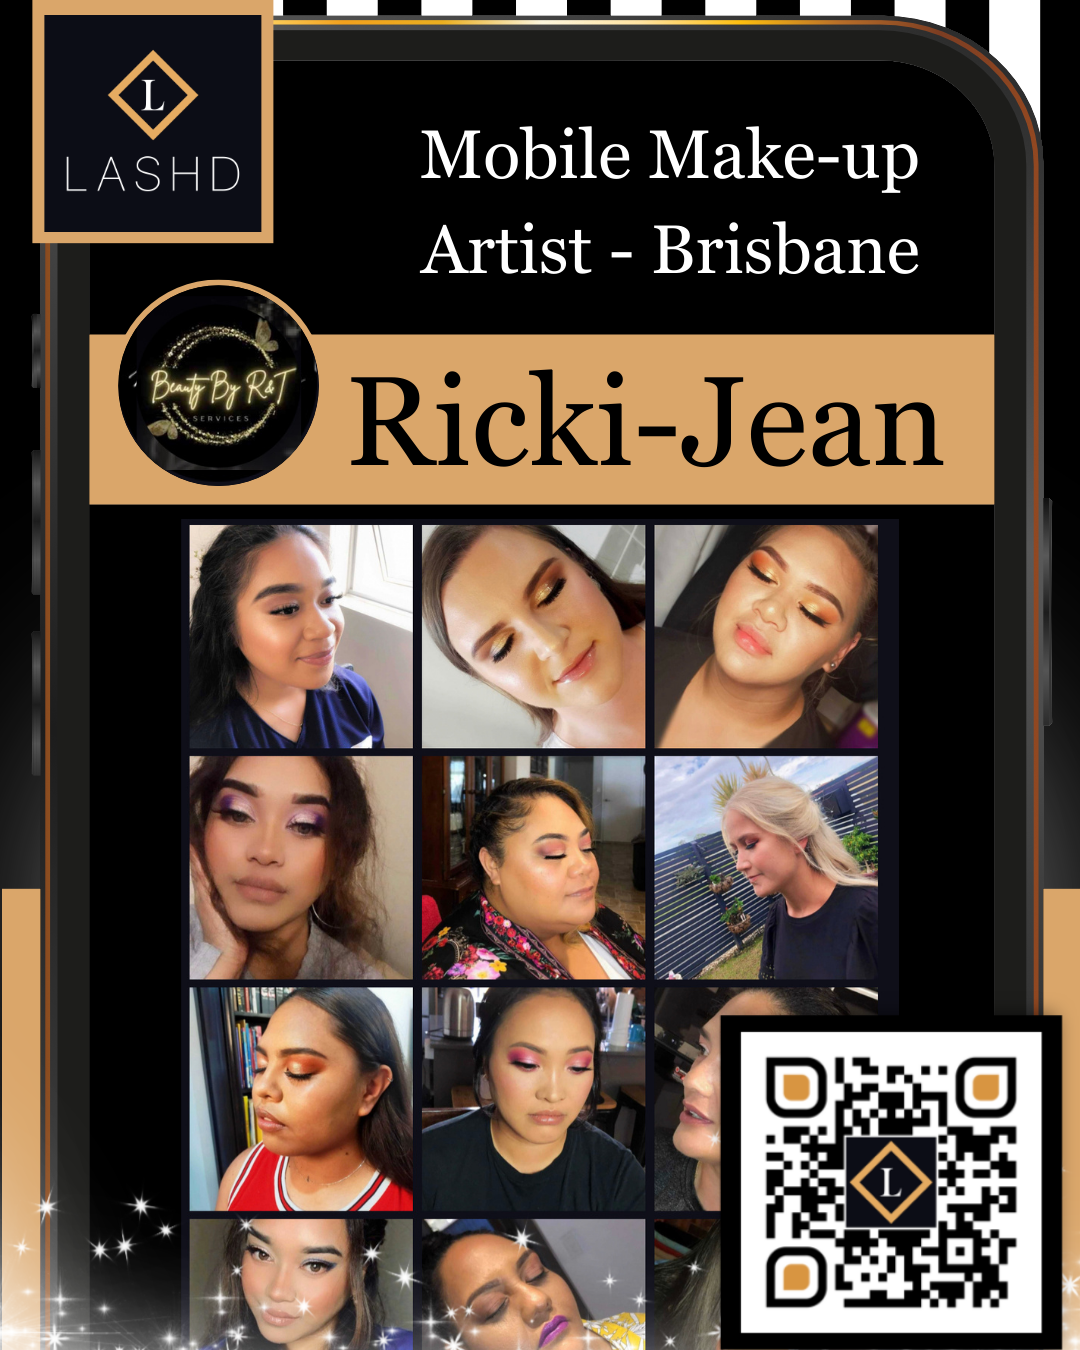 Mobile Makeup Artist - Deception Bay - Brisbane - Lashd App - Ricki-Jean